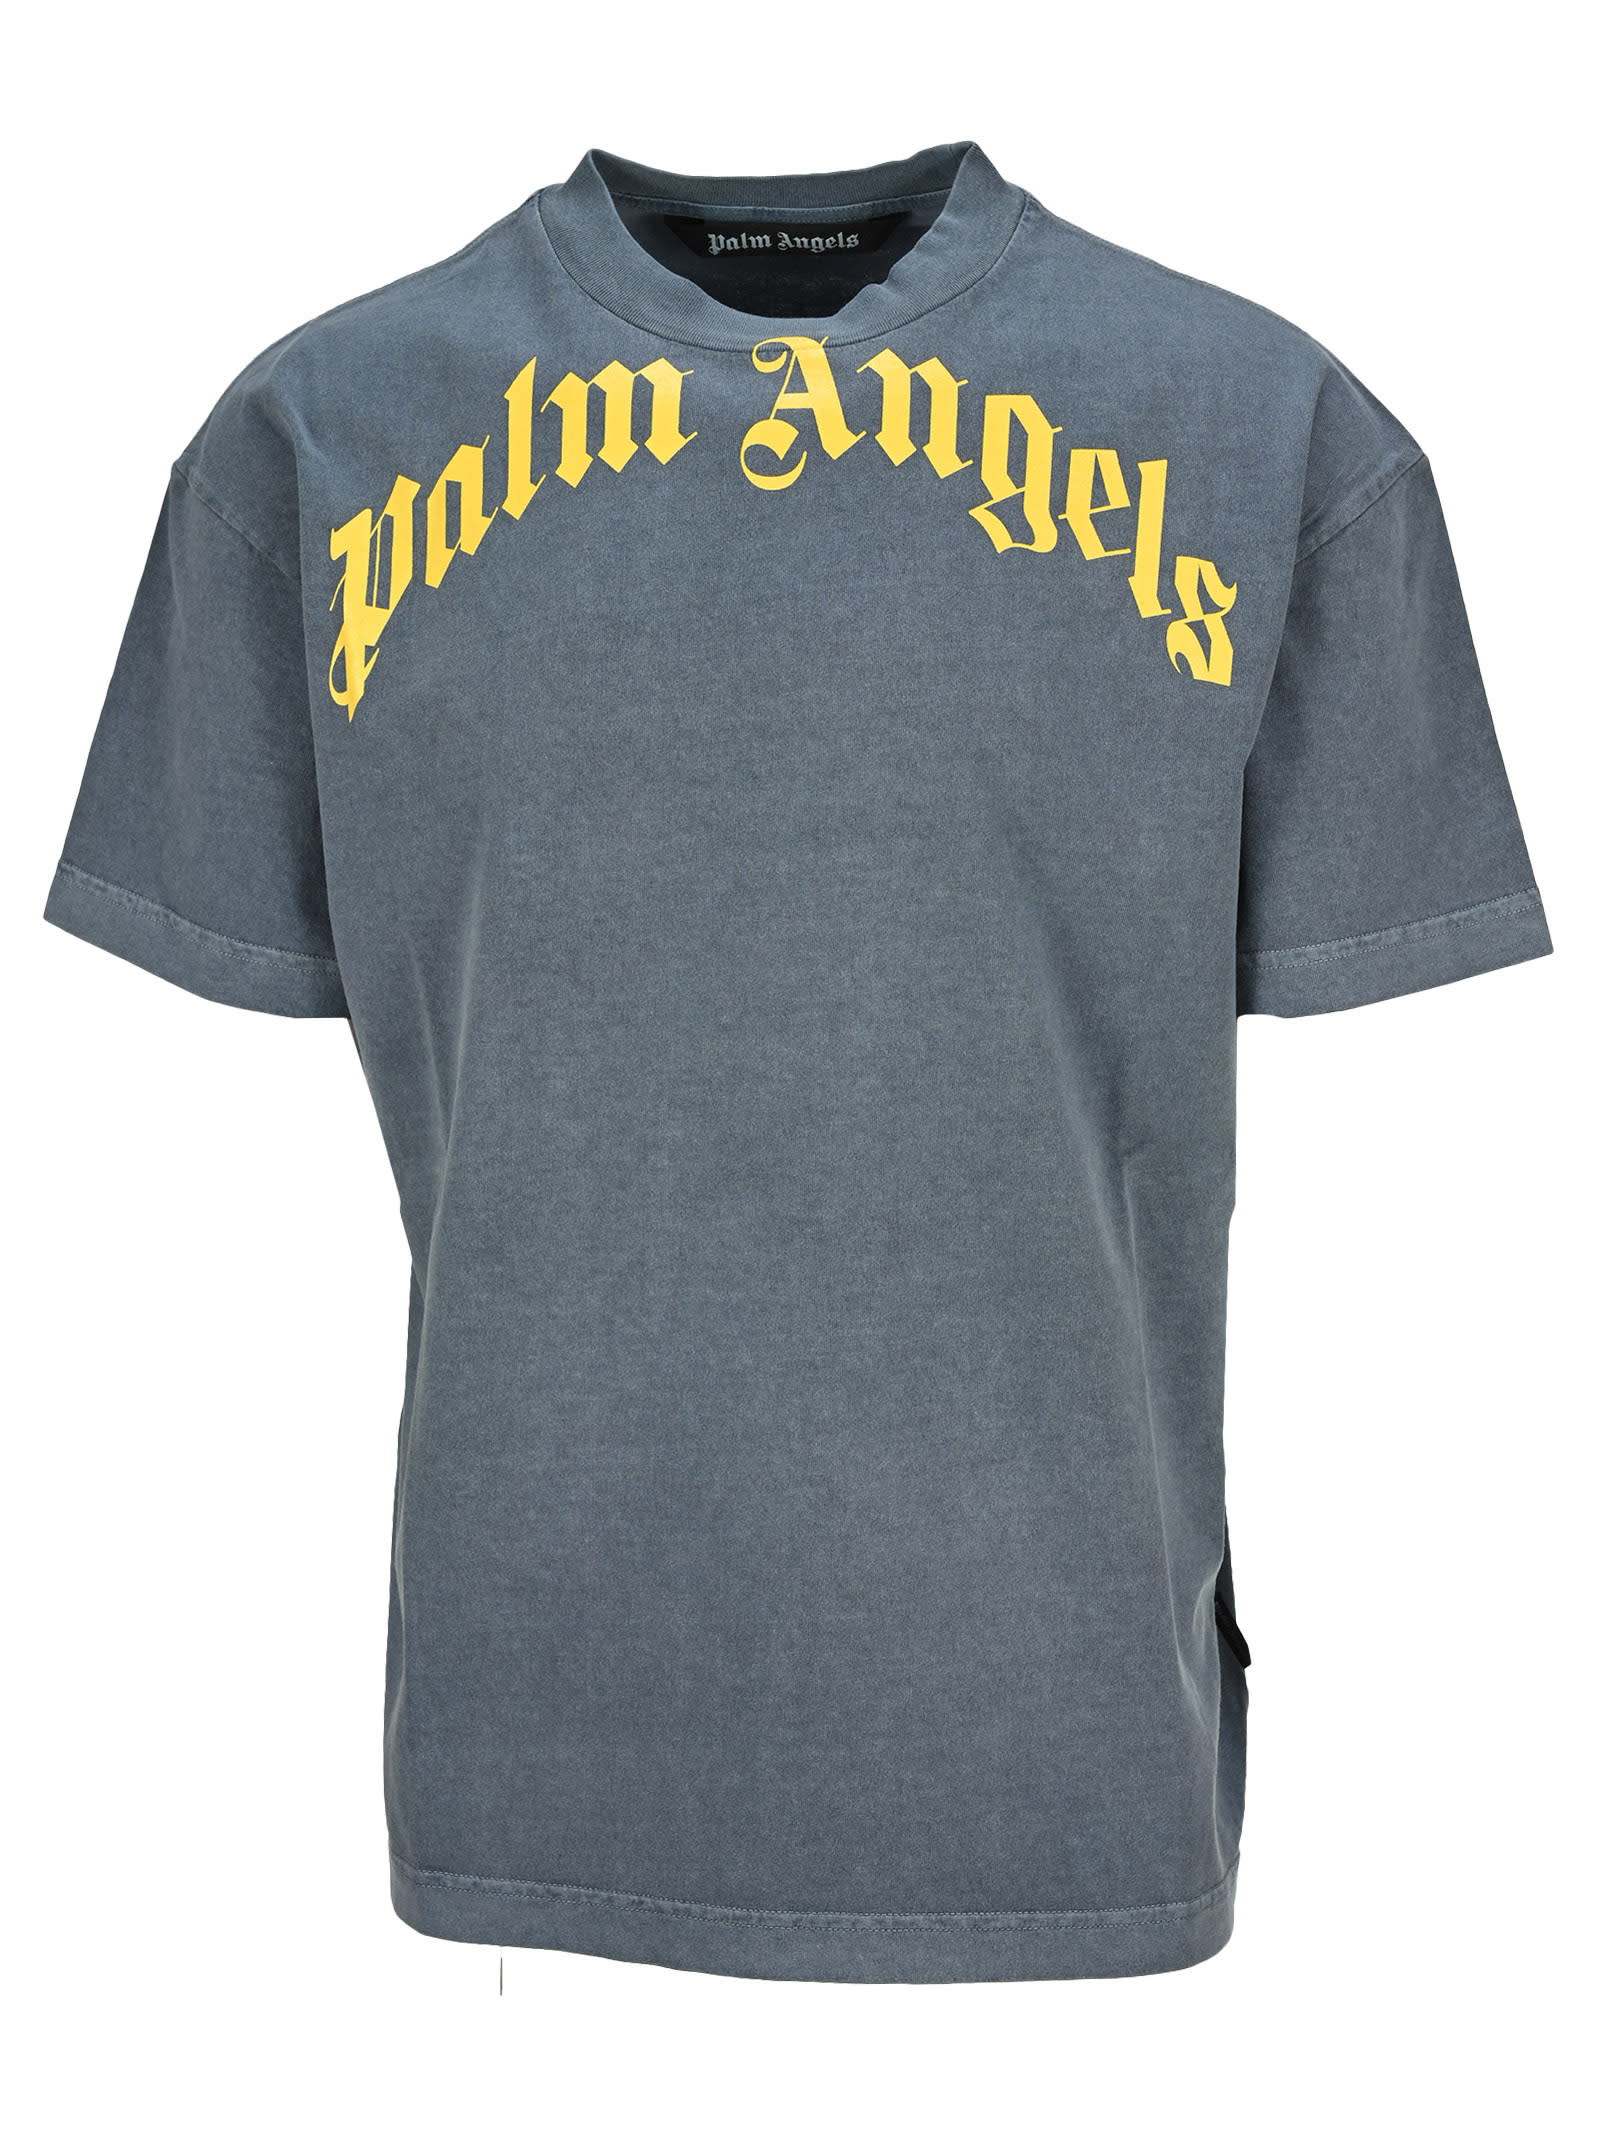 PALM ANGELS VINTAGE T-SHIRT,11726320